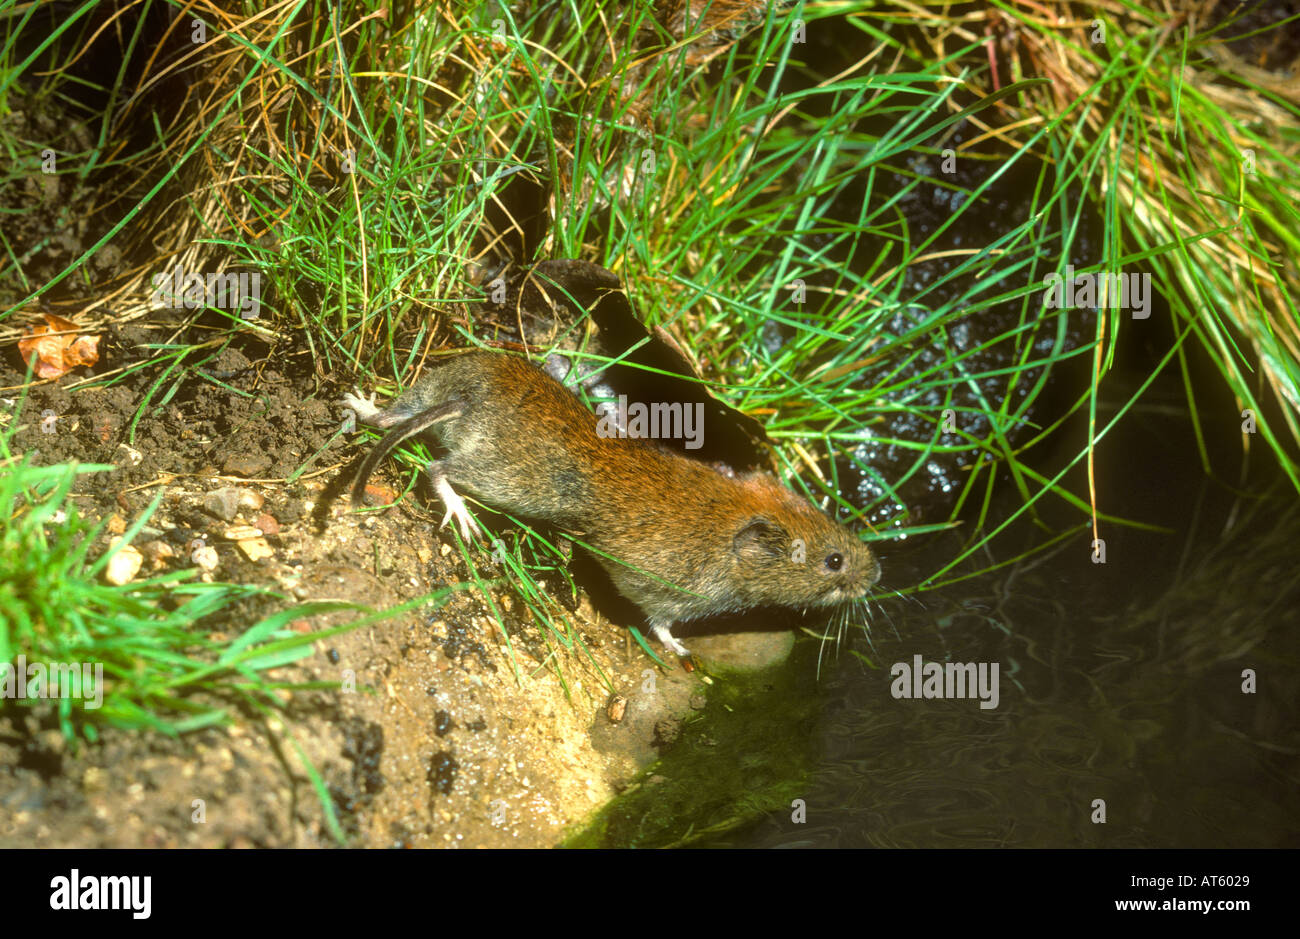 Field vole taking a drink Stock Photo